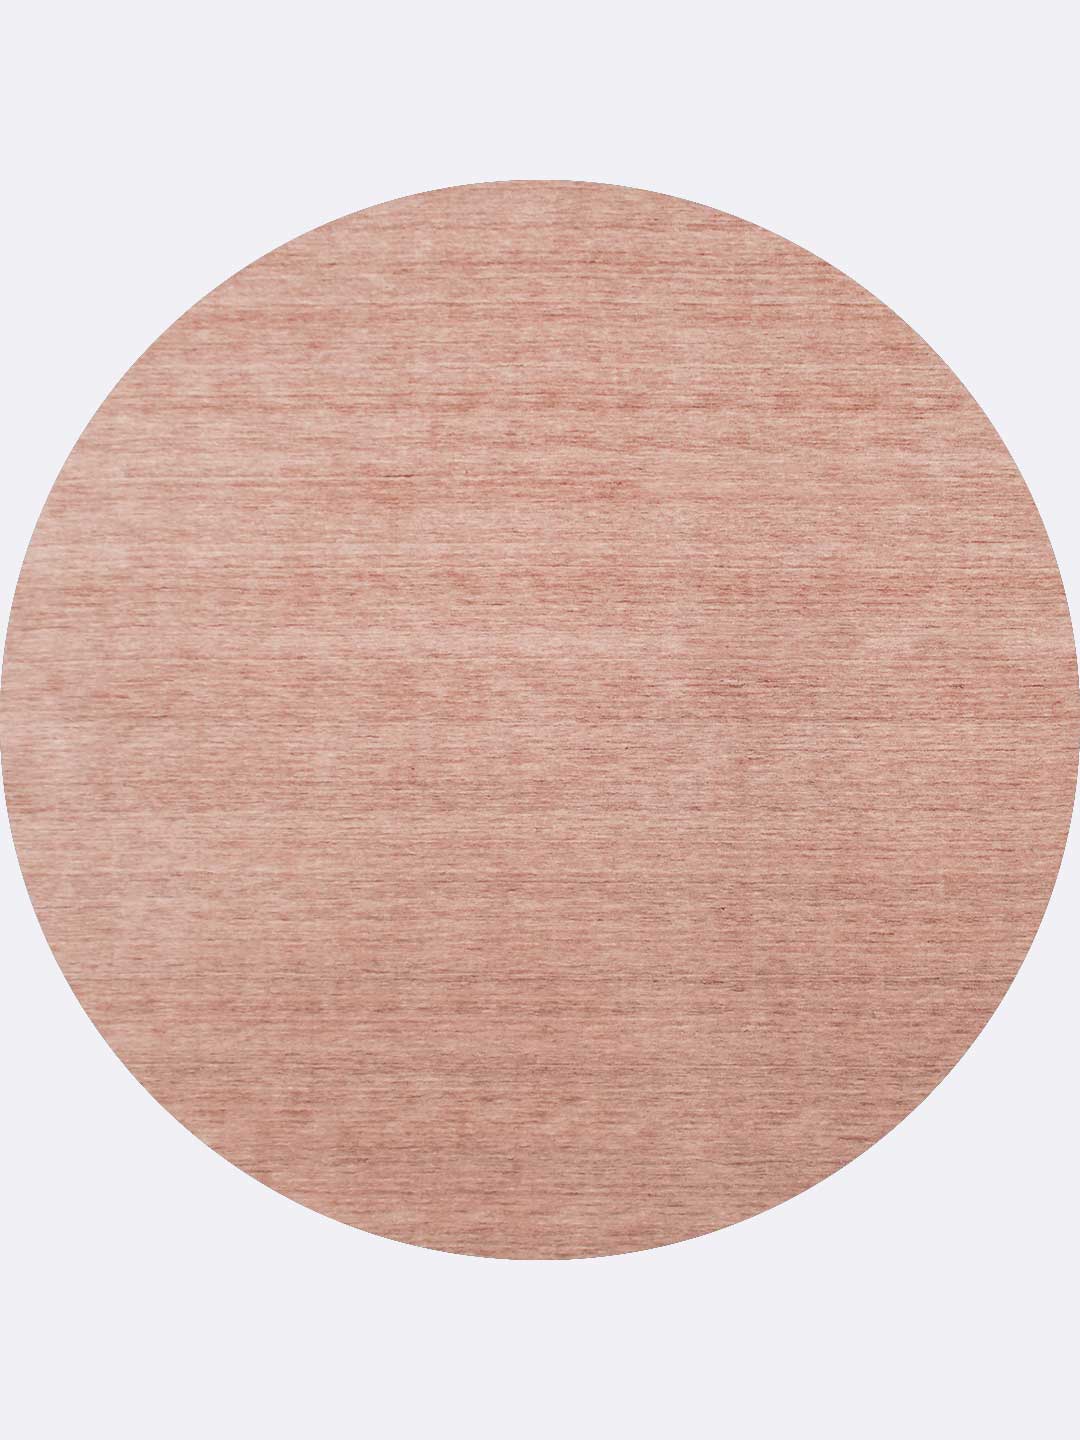 Diva round wool rug in Rosetta pink